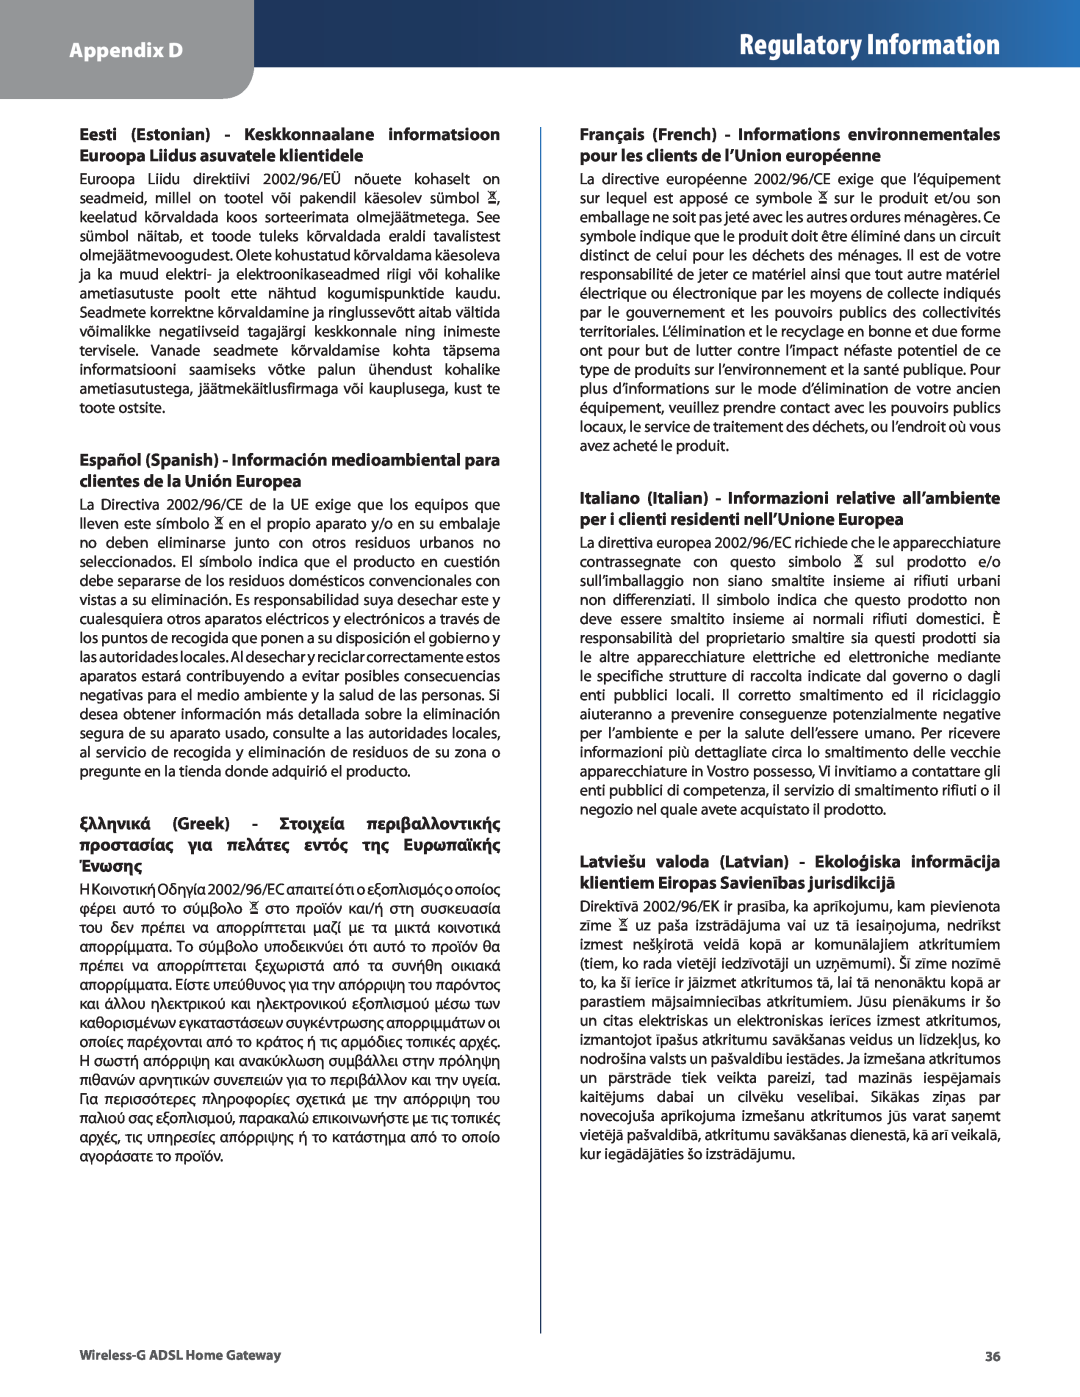 Linksys WAG200G manual Regulatory Information, Appendix D, La direttiva europea 2002/96/EC richiede che le apparecchiature 